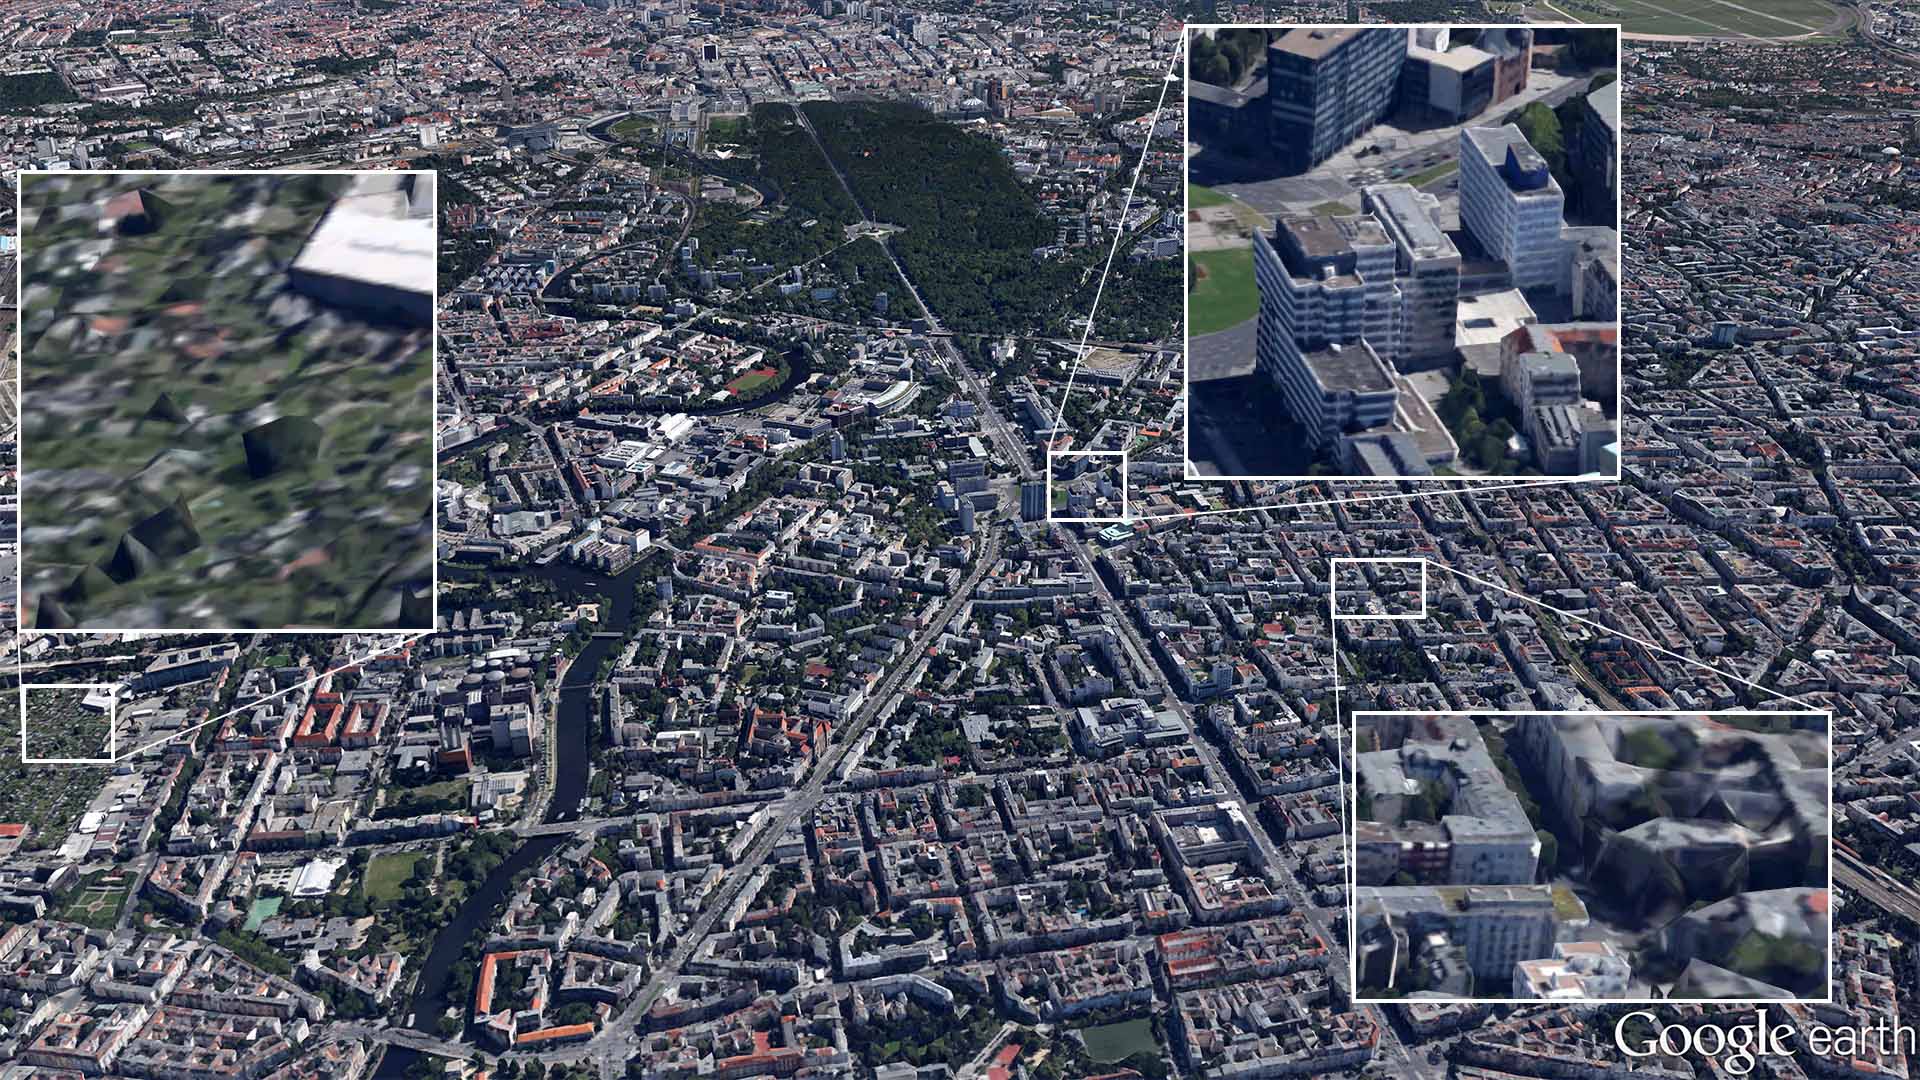 Google Earth on Berlin, hitting the Limit